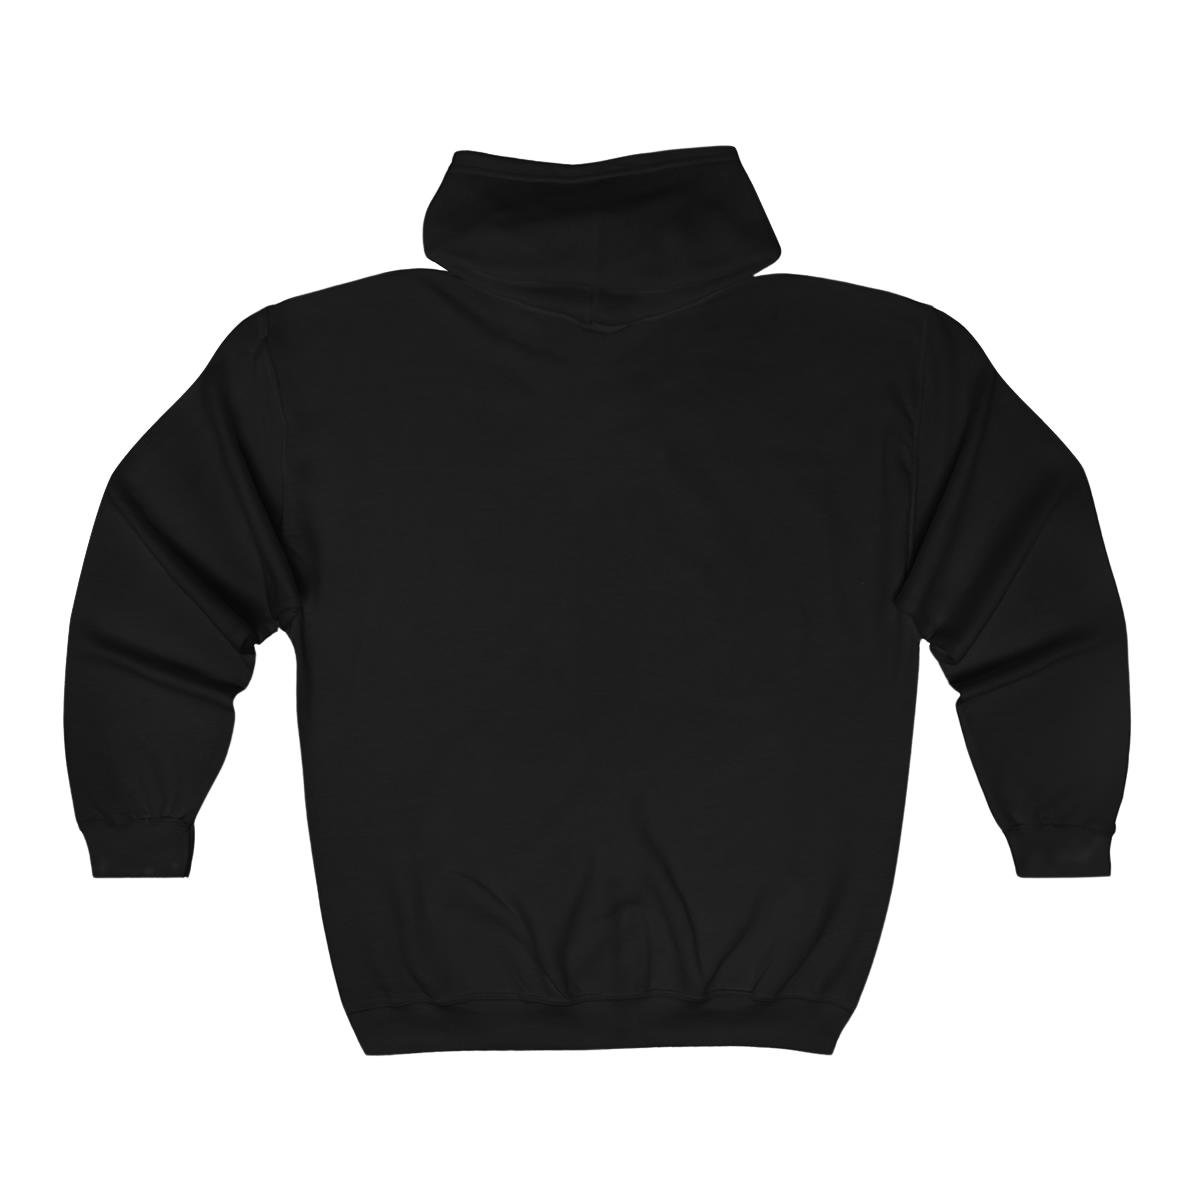 TheBlast.FM – The Implosion Full Zip Hooded Sweatshirt